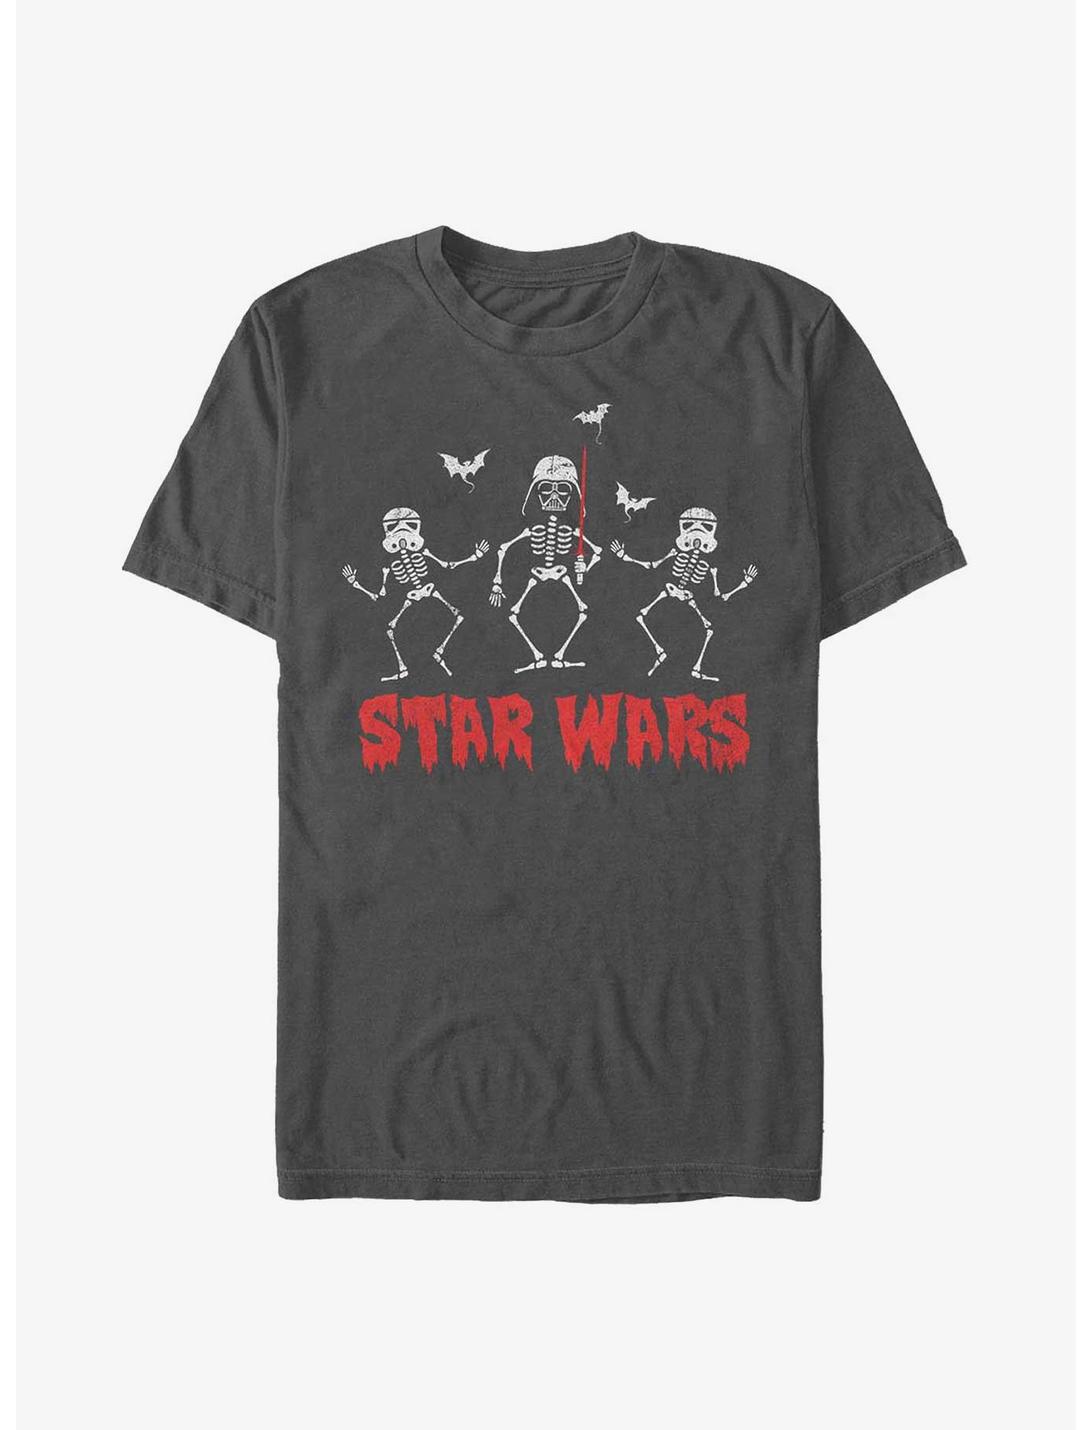 Star Wars Creep Wars T-Shirt, CHARCOAL, hi-res